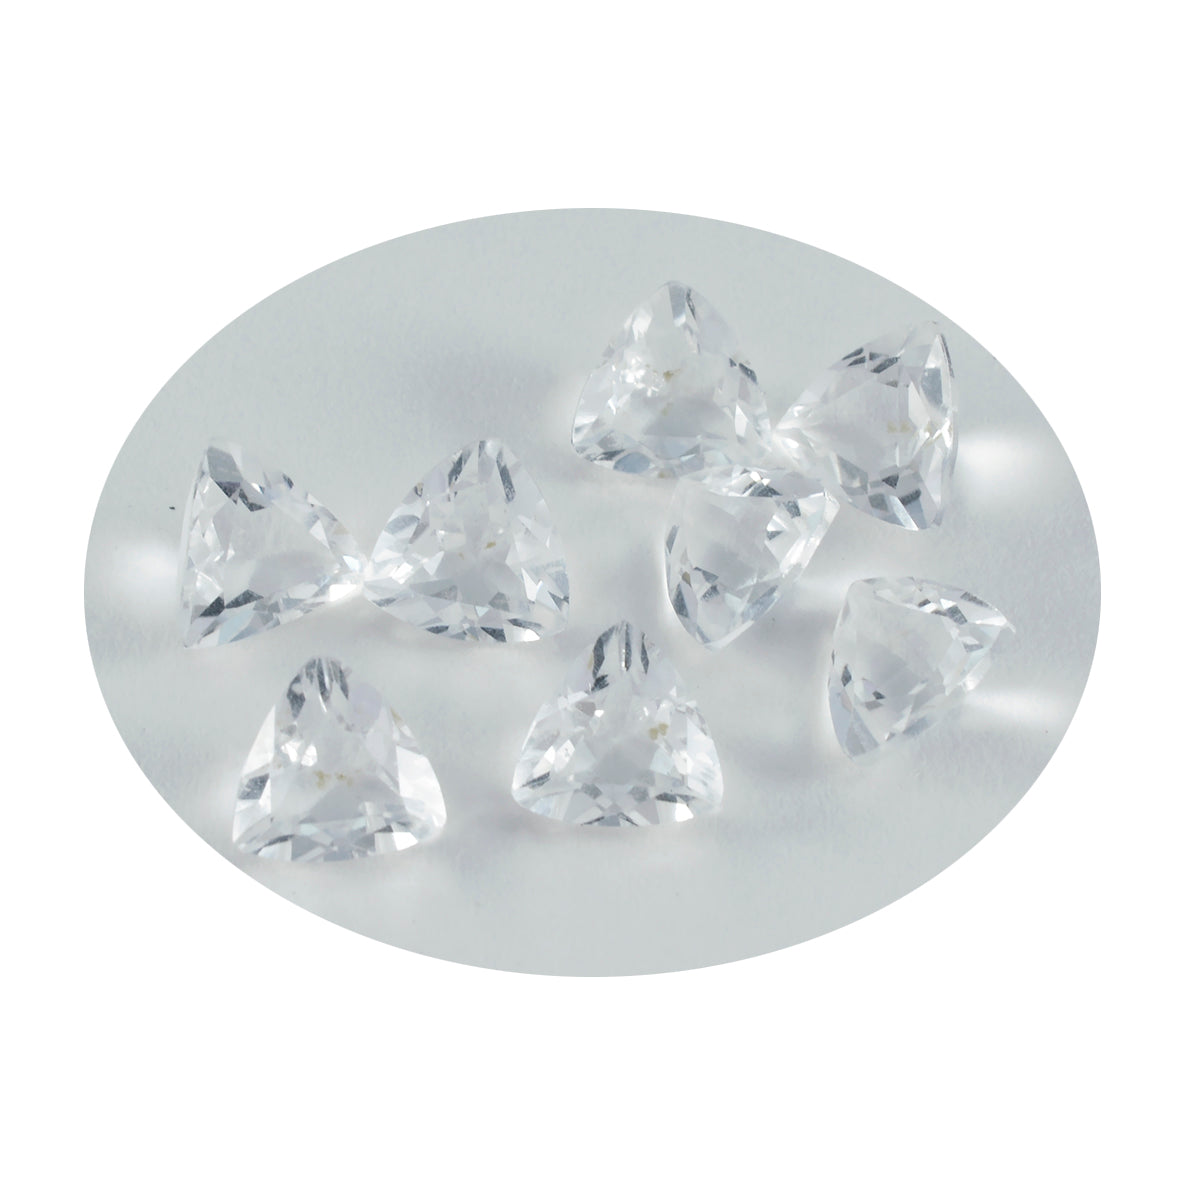 Riyogems 1PC White Crystal Quartz Faceted 8x8 mm Trillion Shape awesome Quality Loose Gem